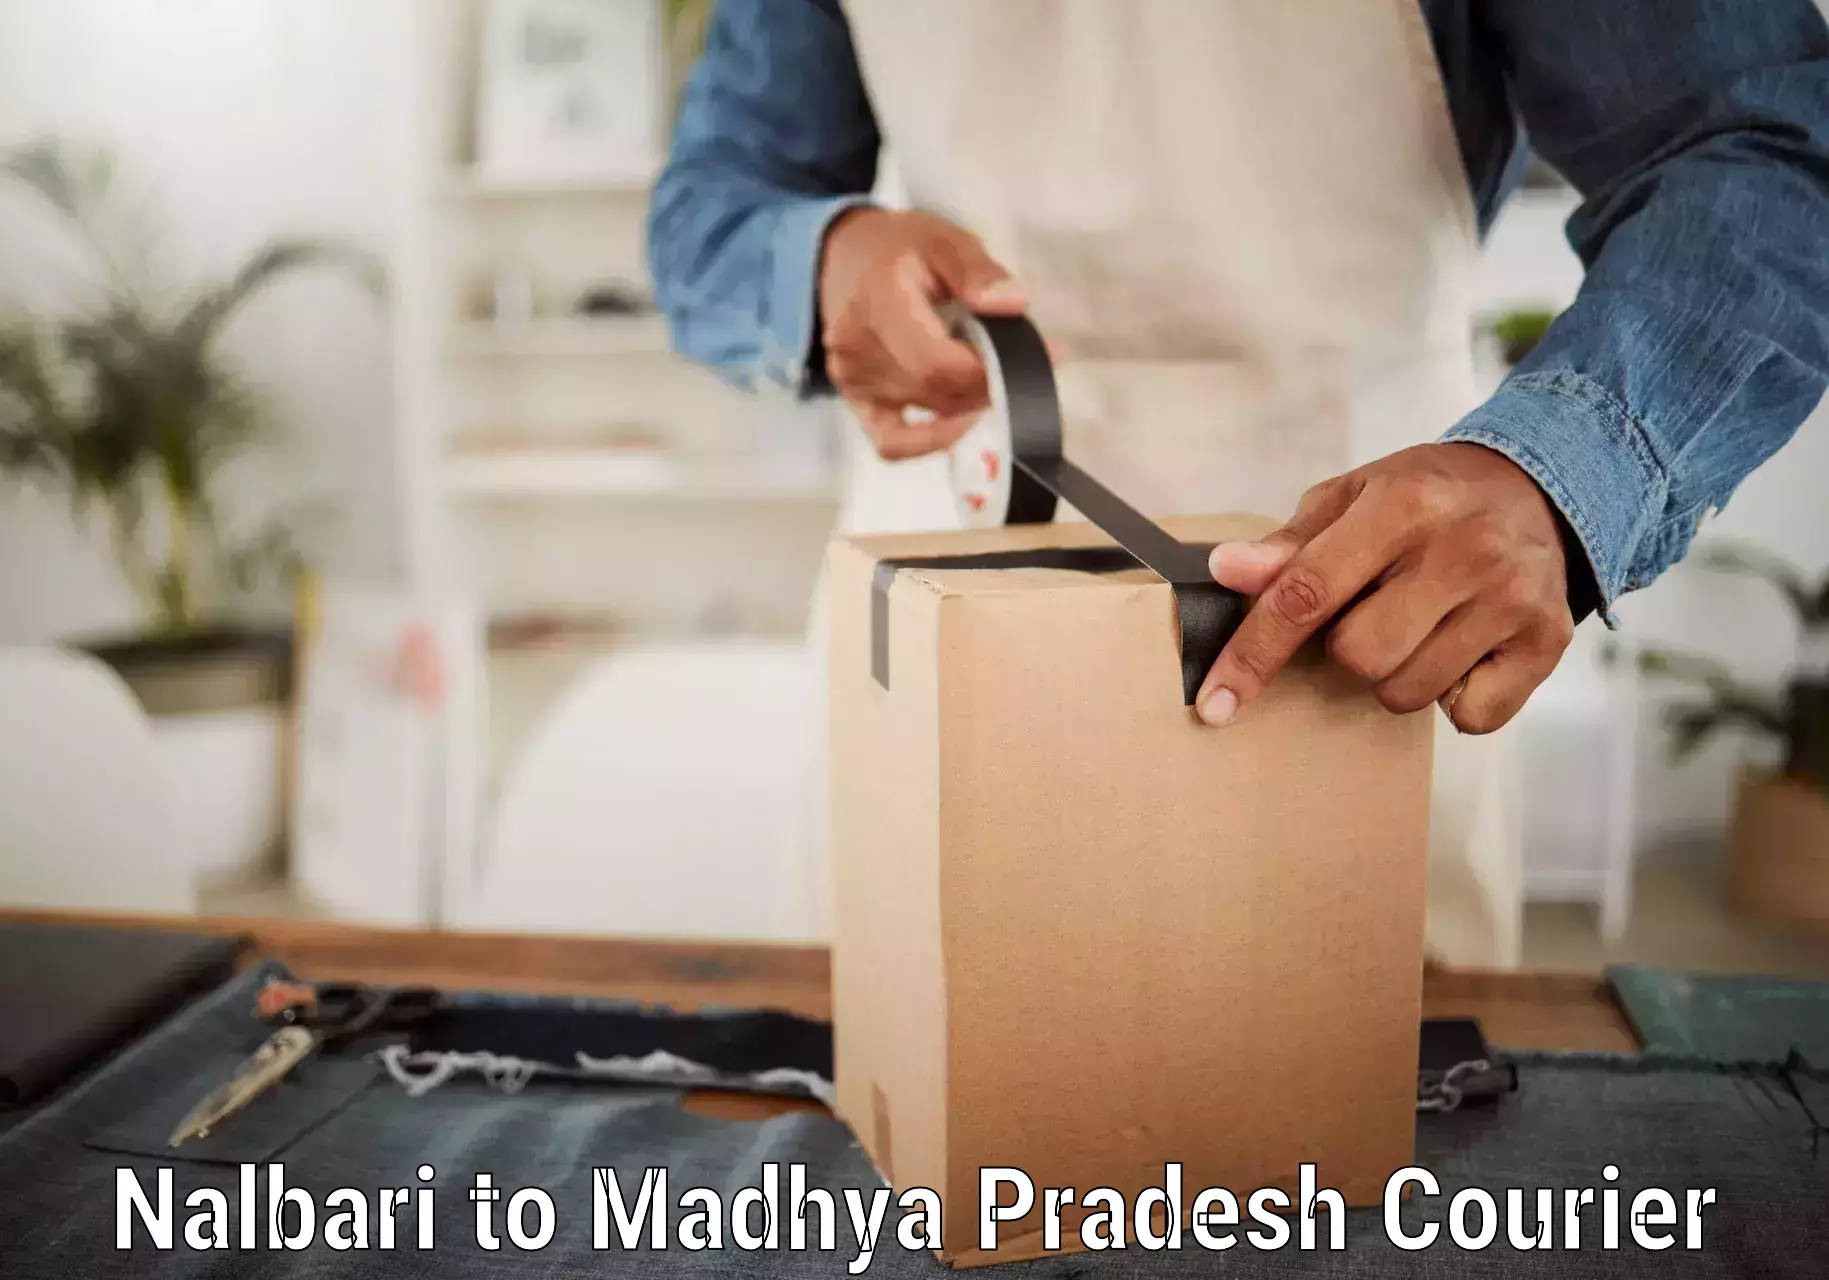 Reliable delivery network Nalbari to Madhya Pradesh